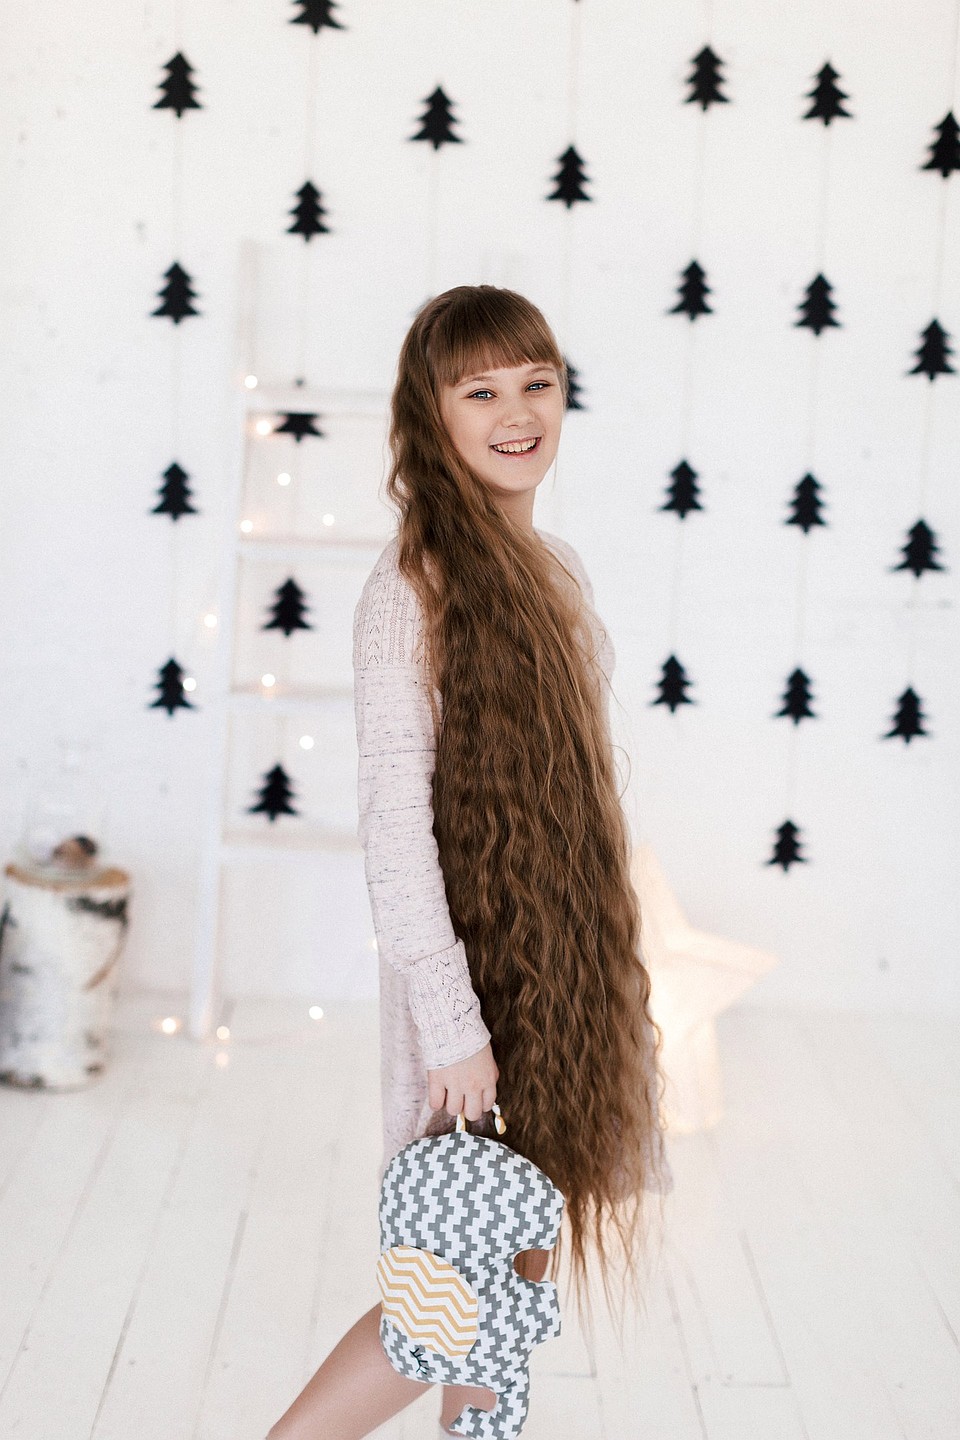 Длина волос девушки - 139 сантиметров! Фото: Анастасия ВОРОНОВА 